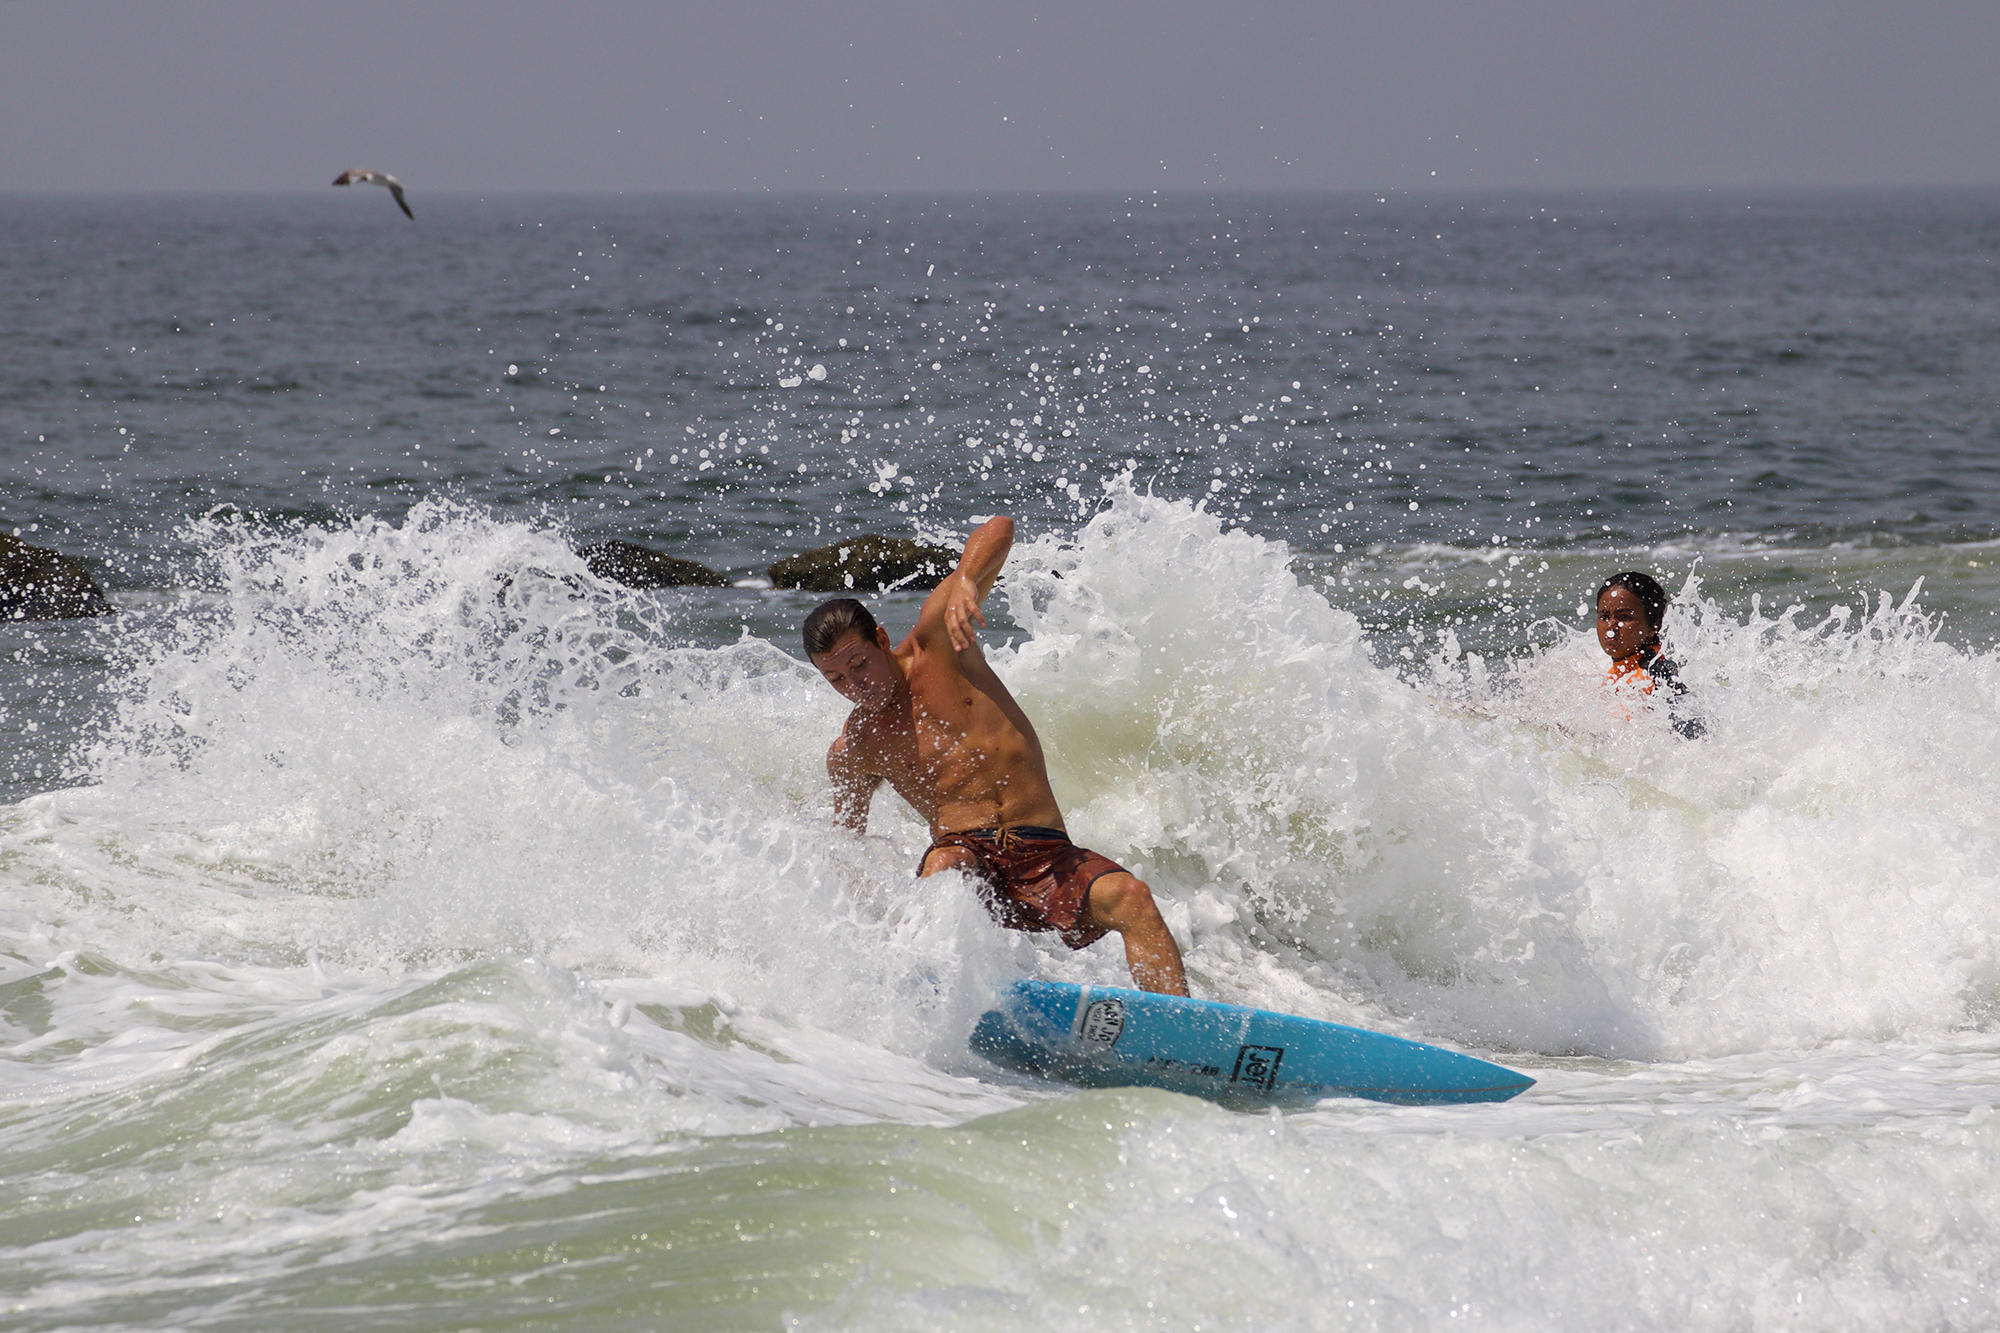 7-15-17 Long Beach Surfer 5.jpg